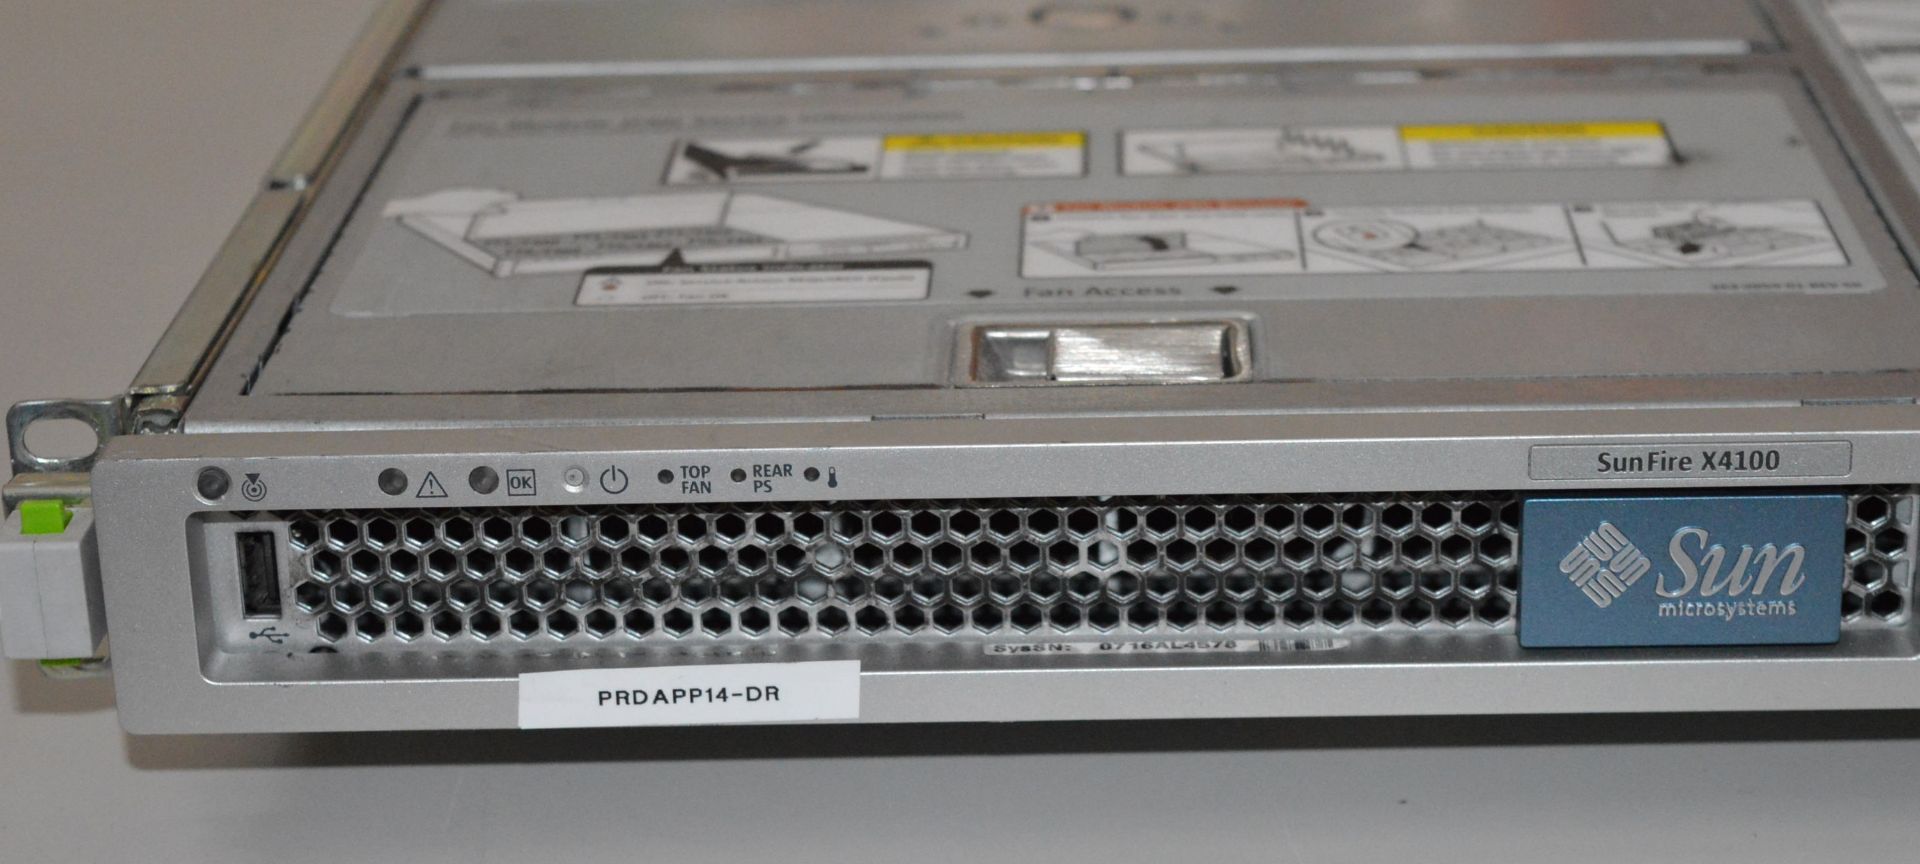 1 x Sun Fire X4100 M2 Server - 2nd Gen Opteron 2220 2.8 GHz Dual-Core - 8 GB - Rack-mountable 1U - - Image 3 of 5